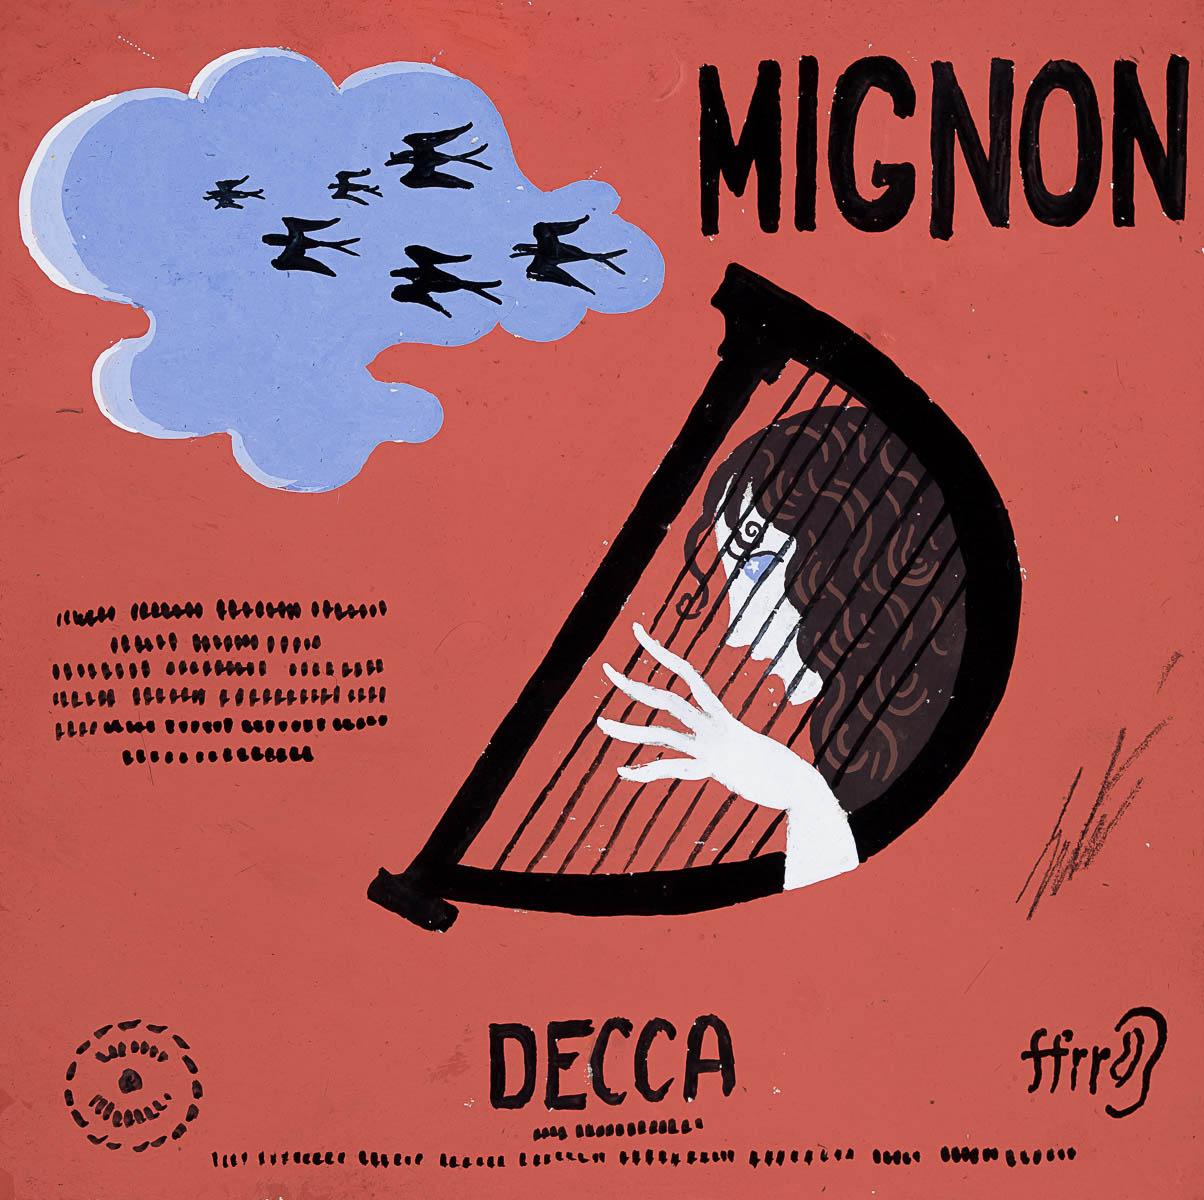 Erté Figurative Art - "Mignon" Decca design